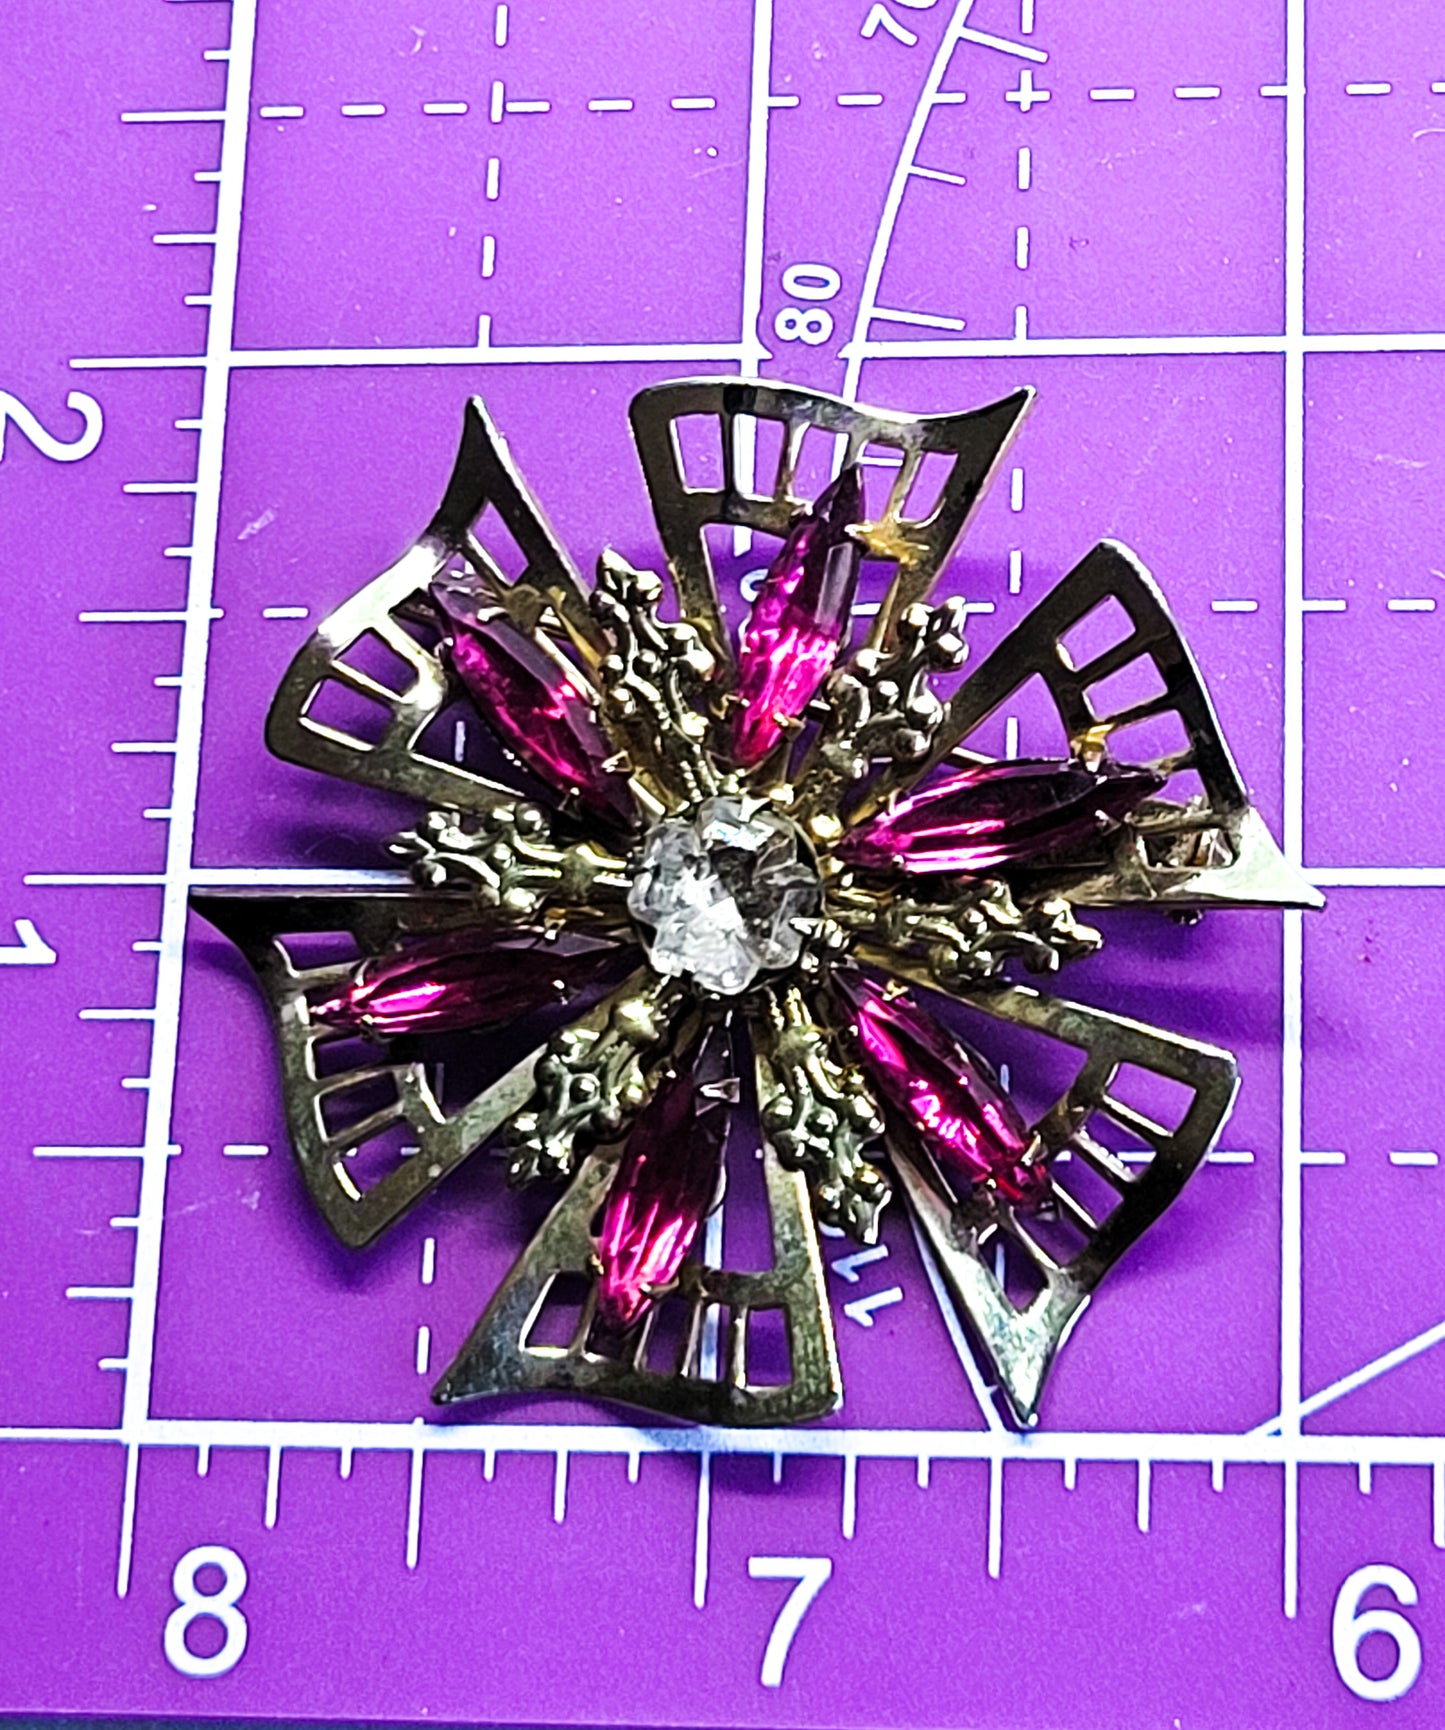 Pink molded glass magenta navetter gold toned vintage scatter brooch pin